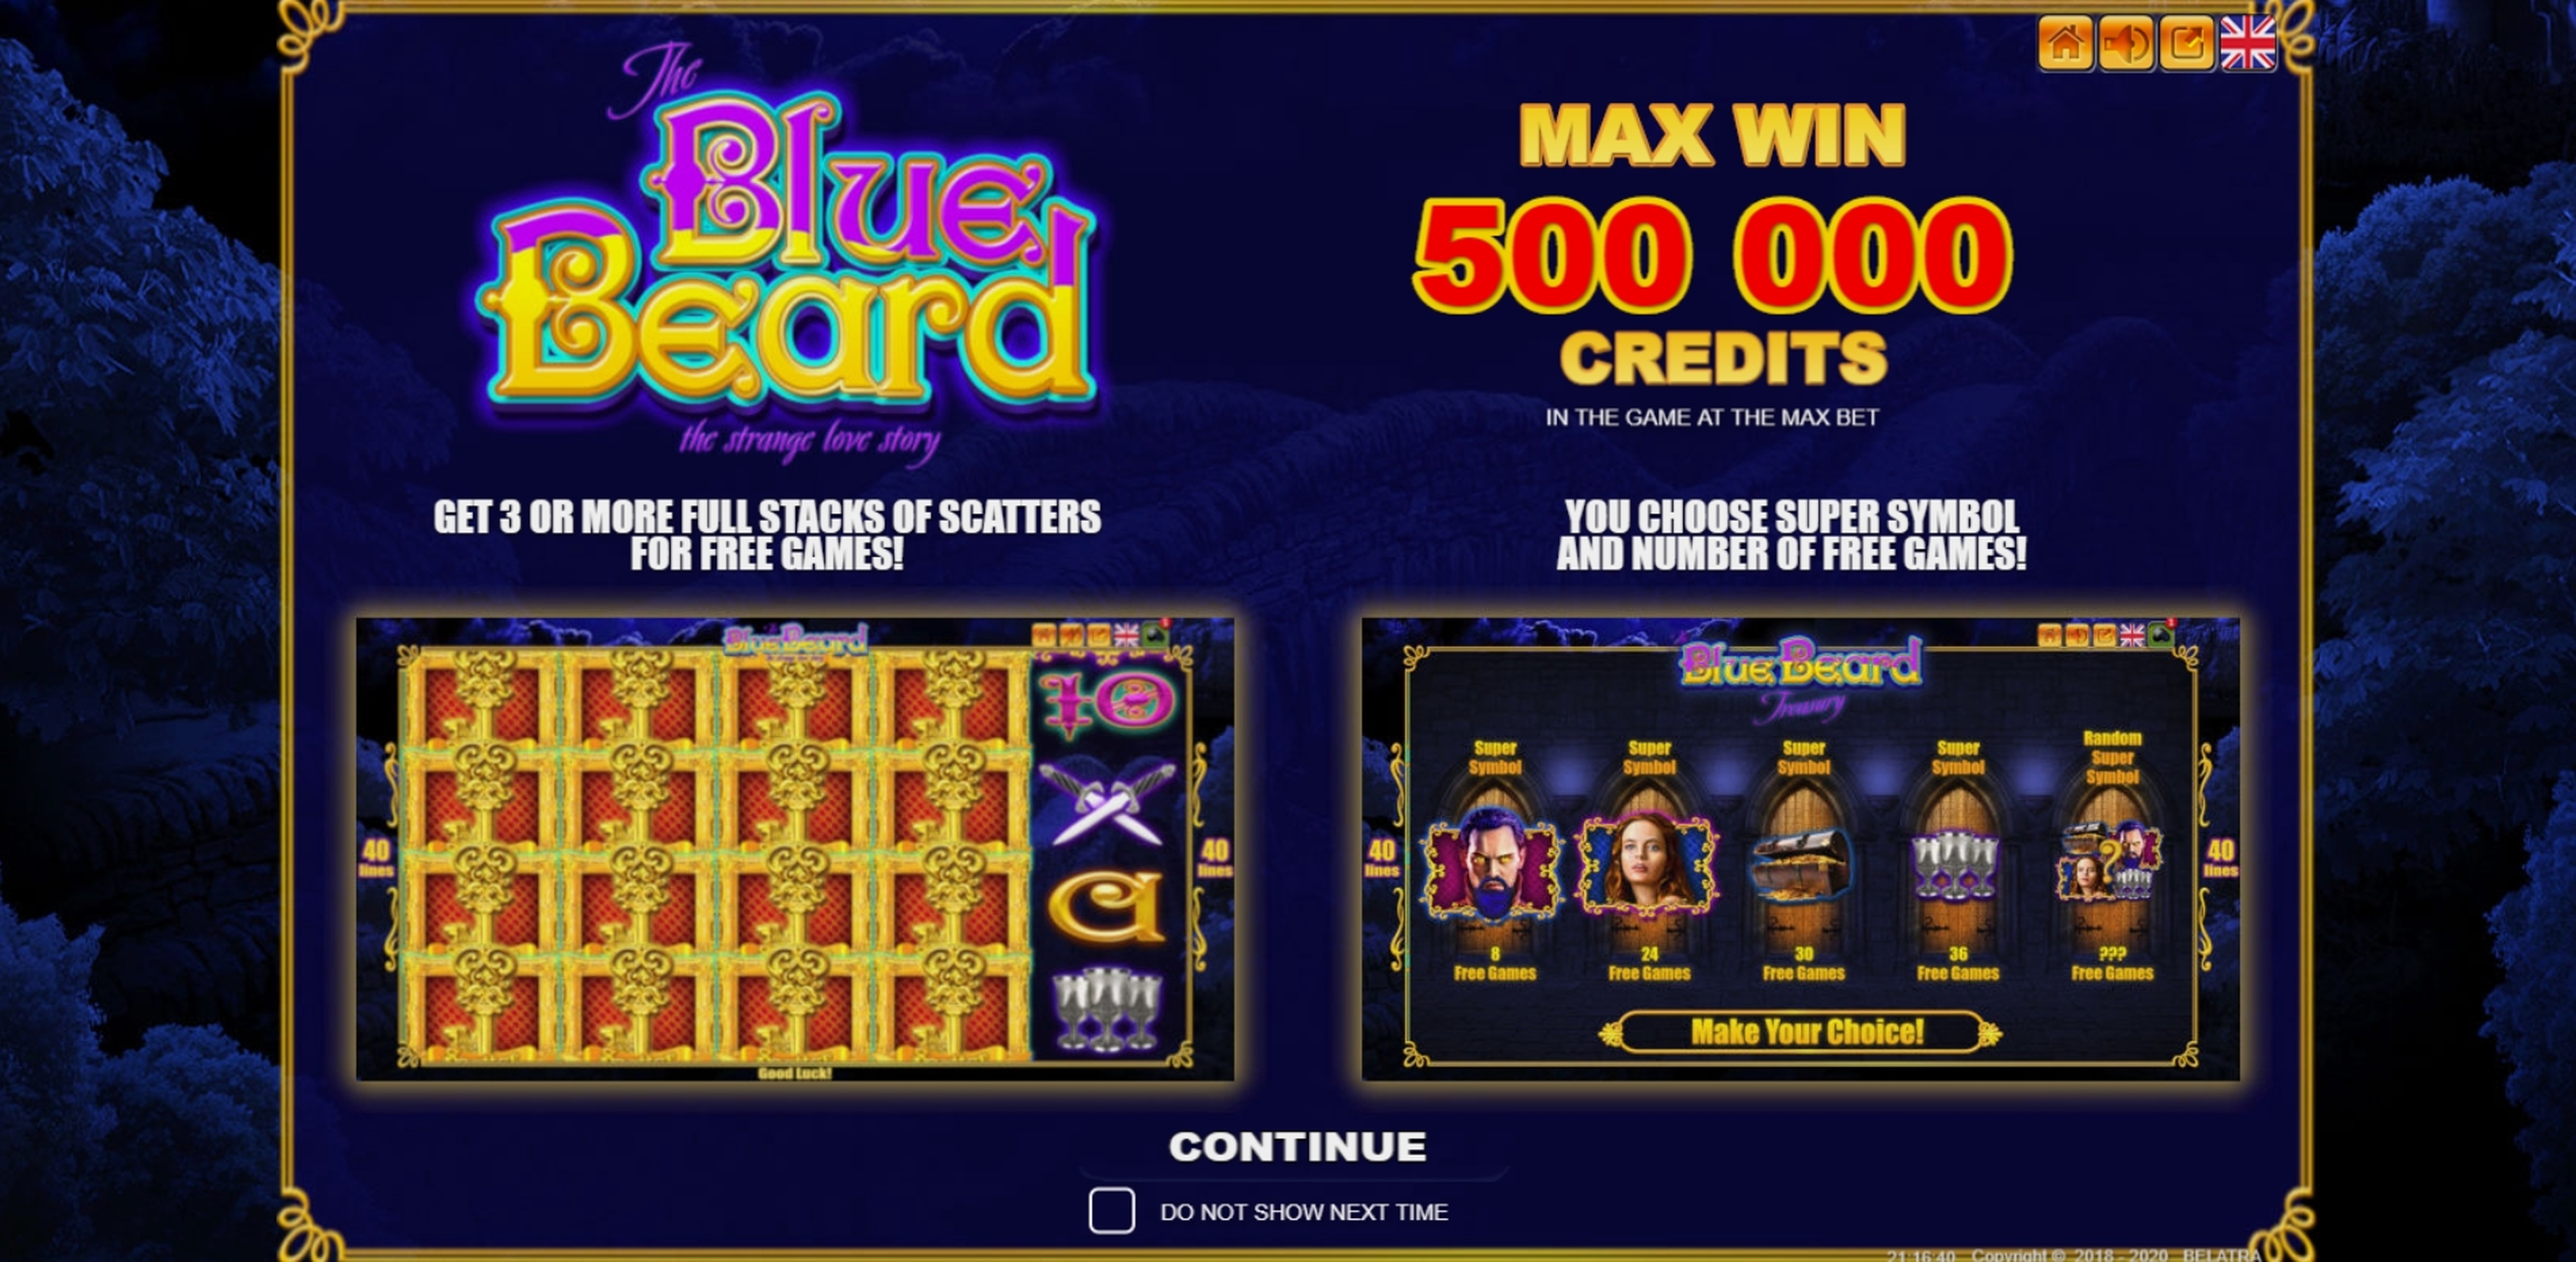 Play Blue Beard Free Casino Slot Game by Belatra Games